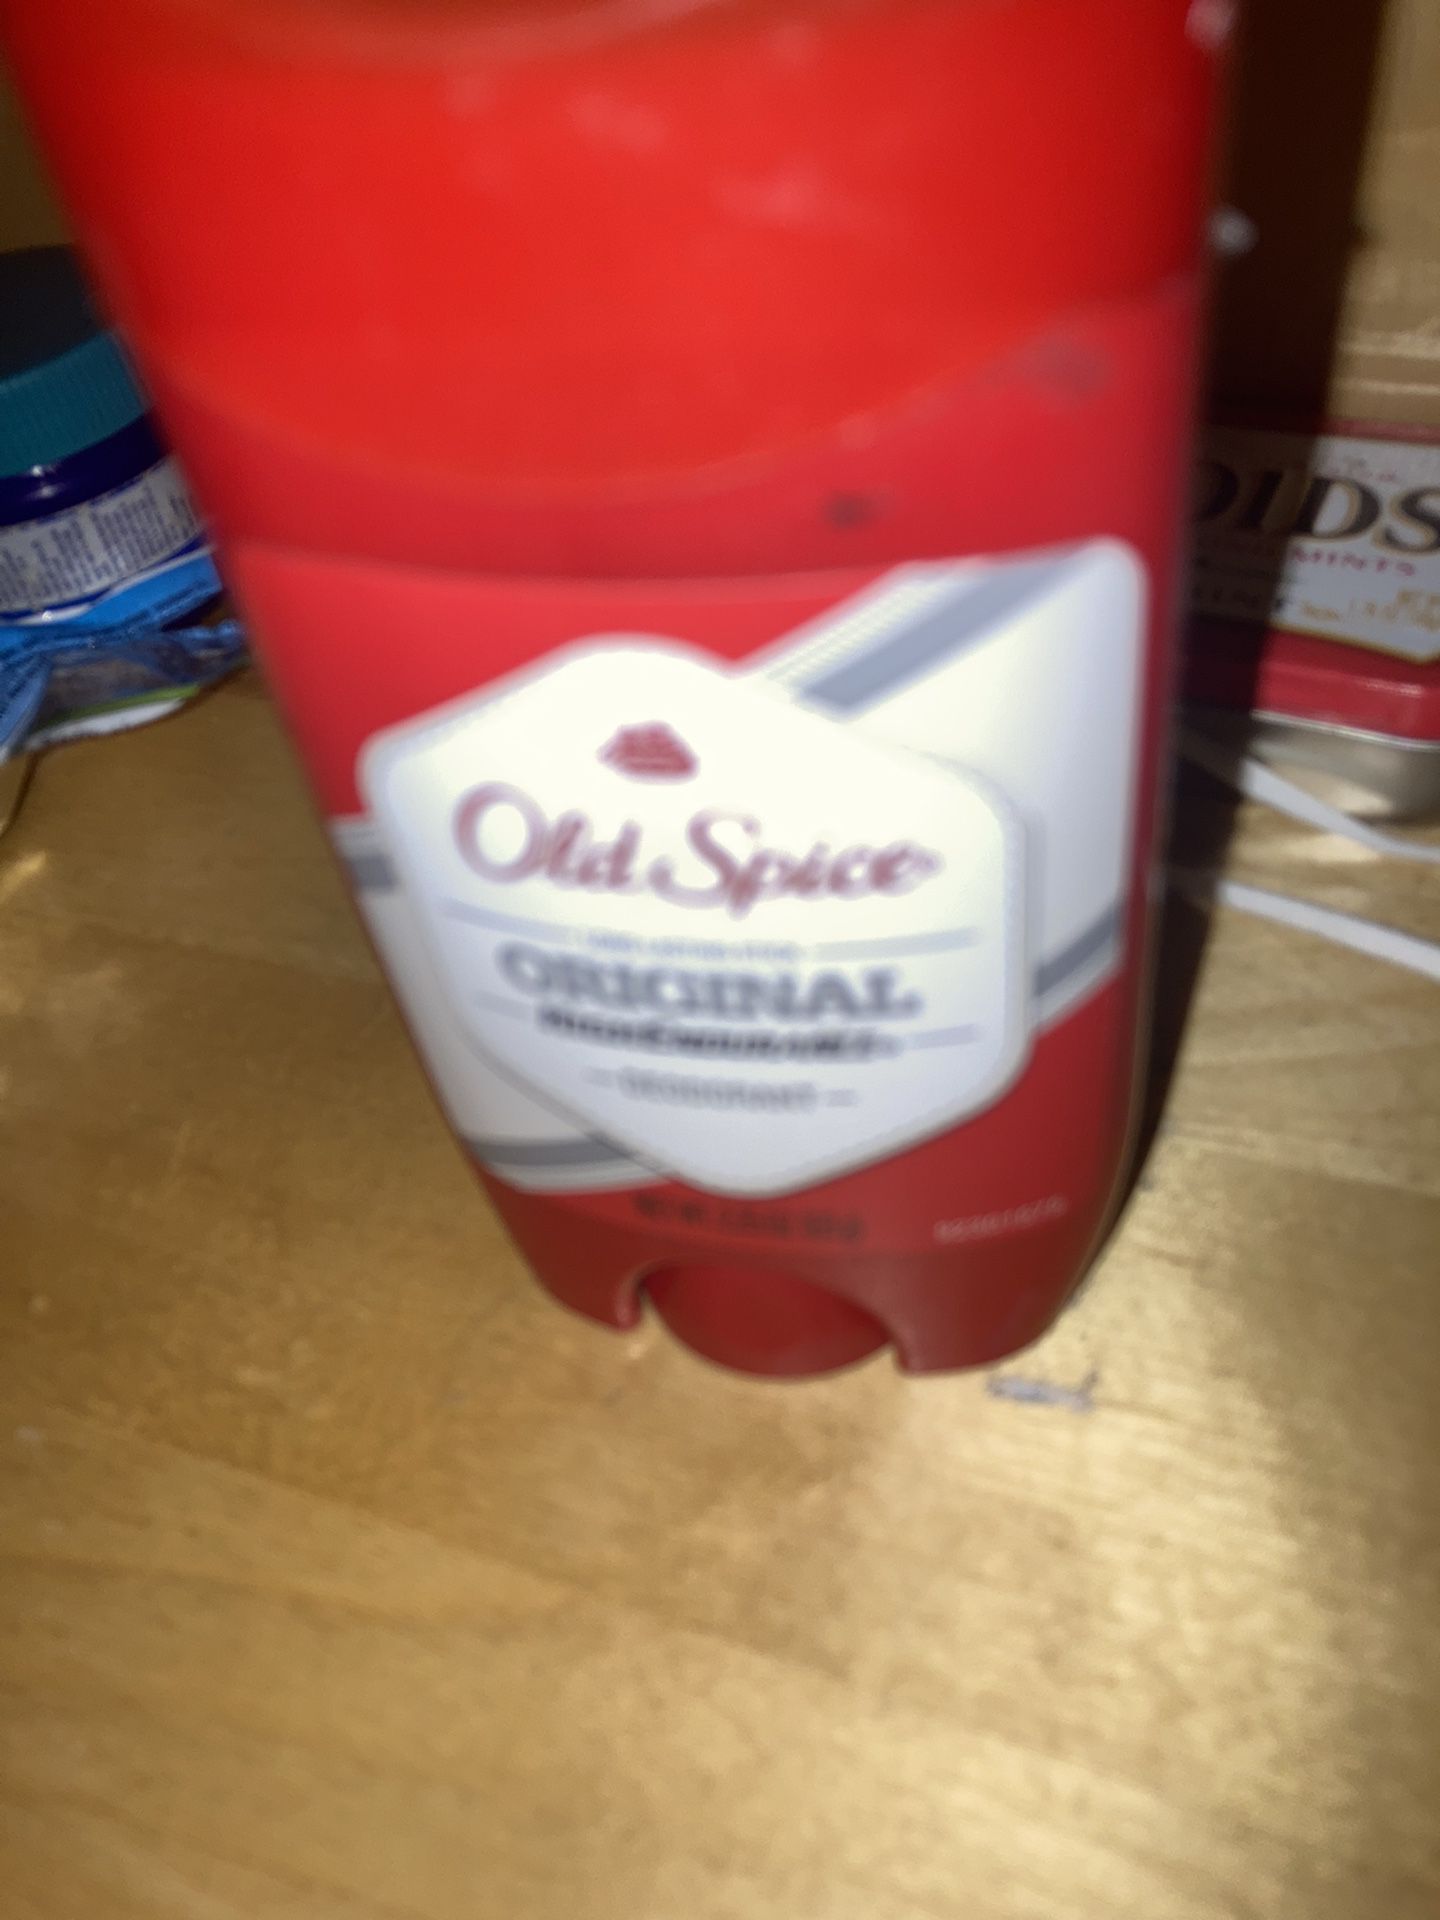 Old Spice Deodorant 